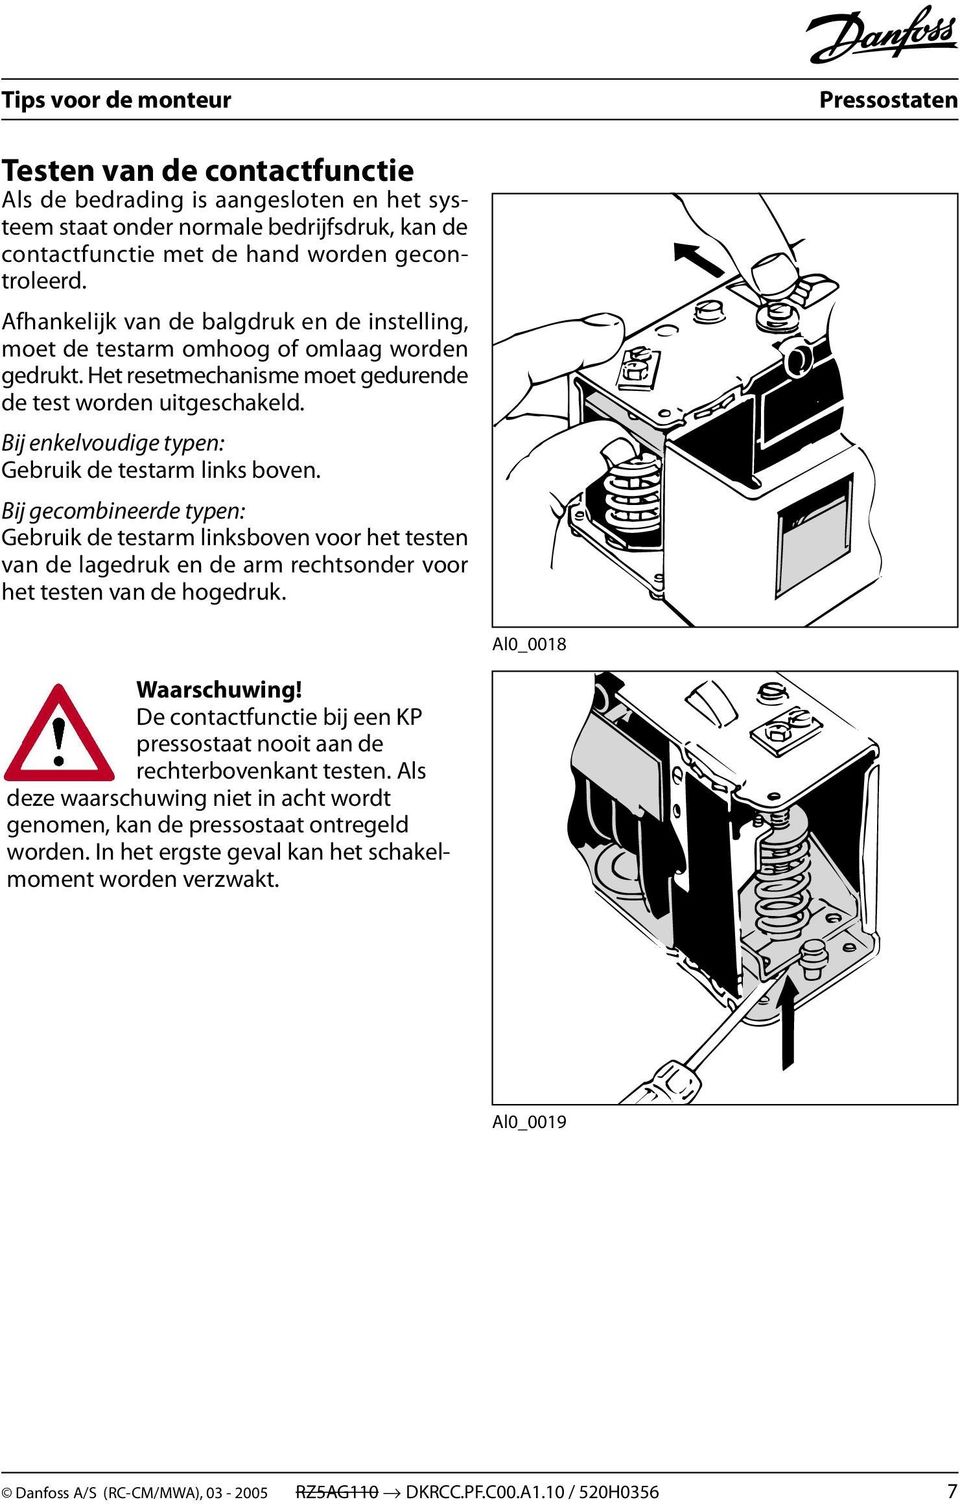 Pressostaten REFRIGERATION AND AIR CONDITIONING. Tips voor de monteur - PDF  Gratis download